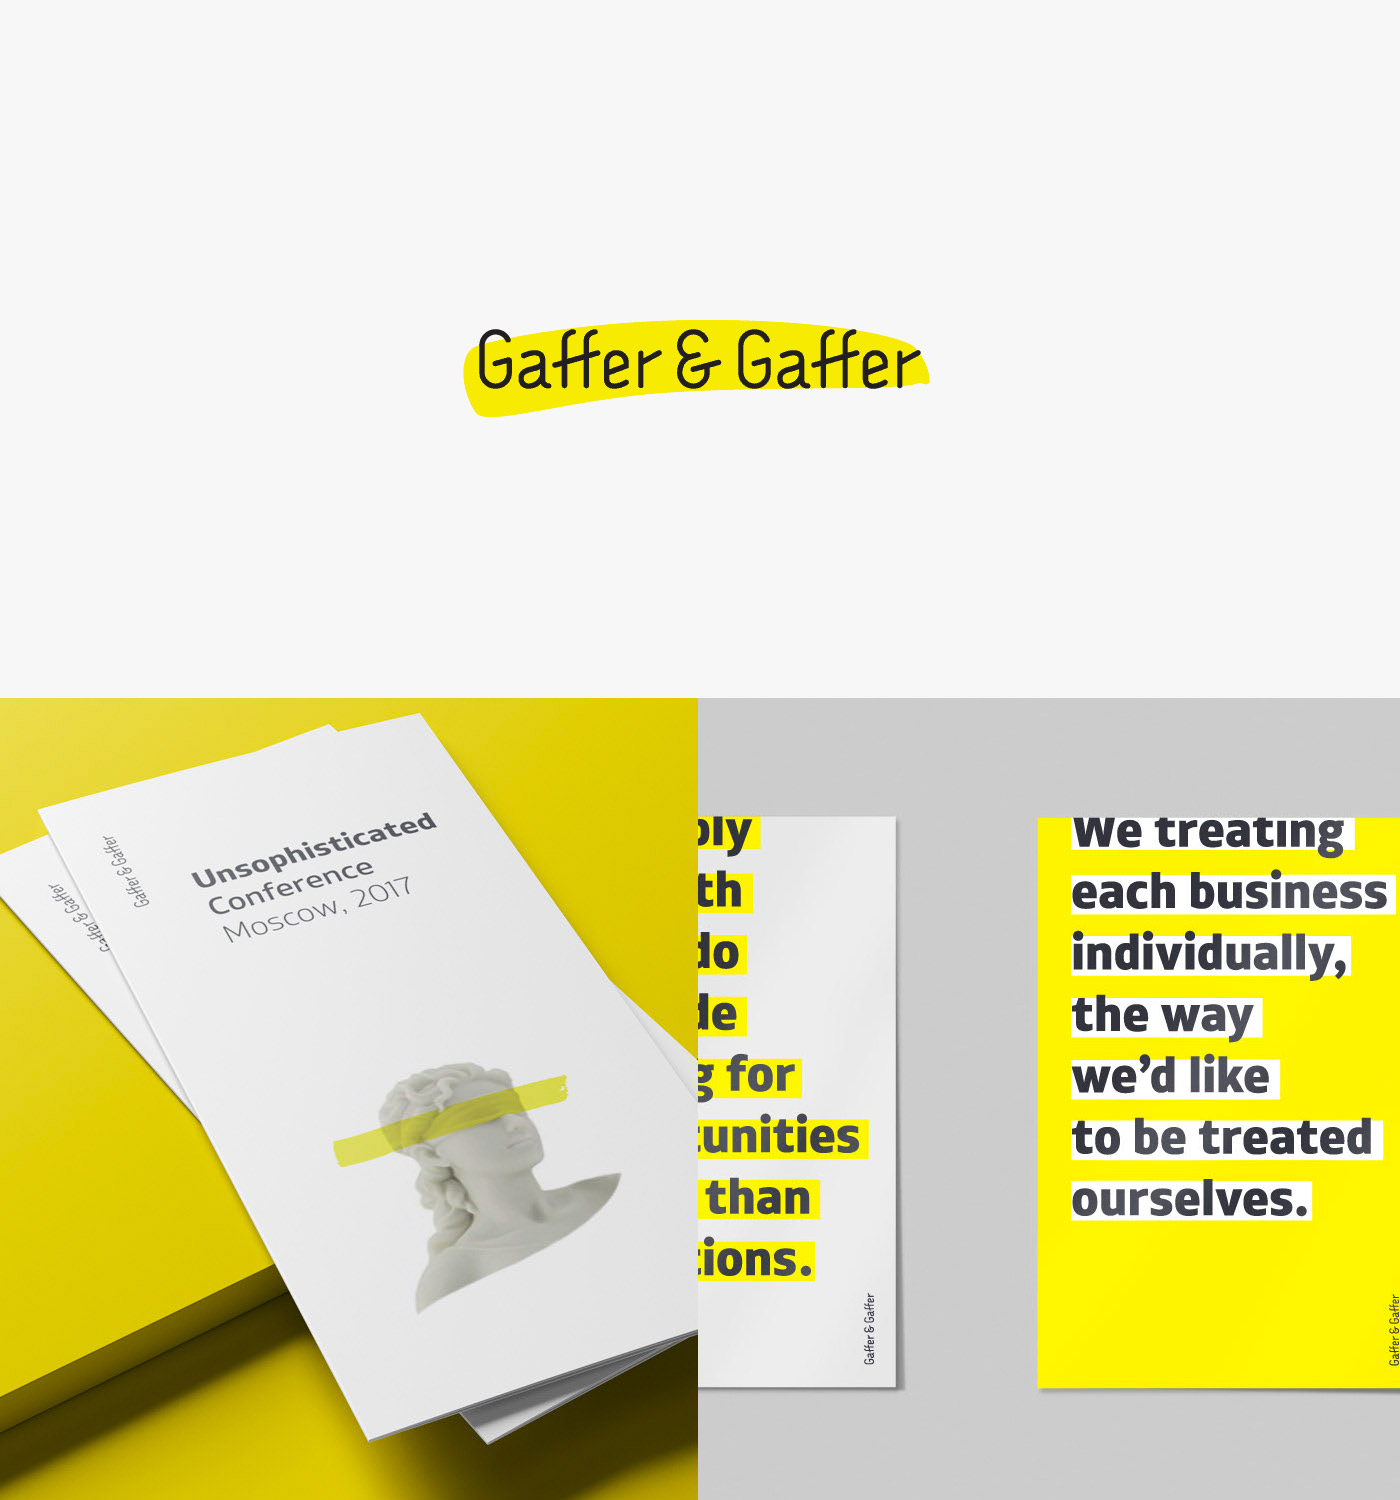 Gaffer & Gaffer Designed by Aleksey Busygin